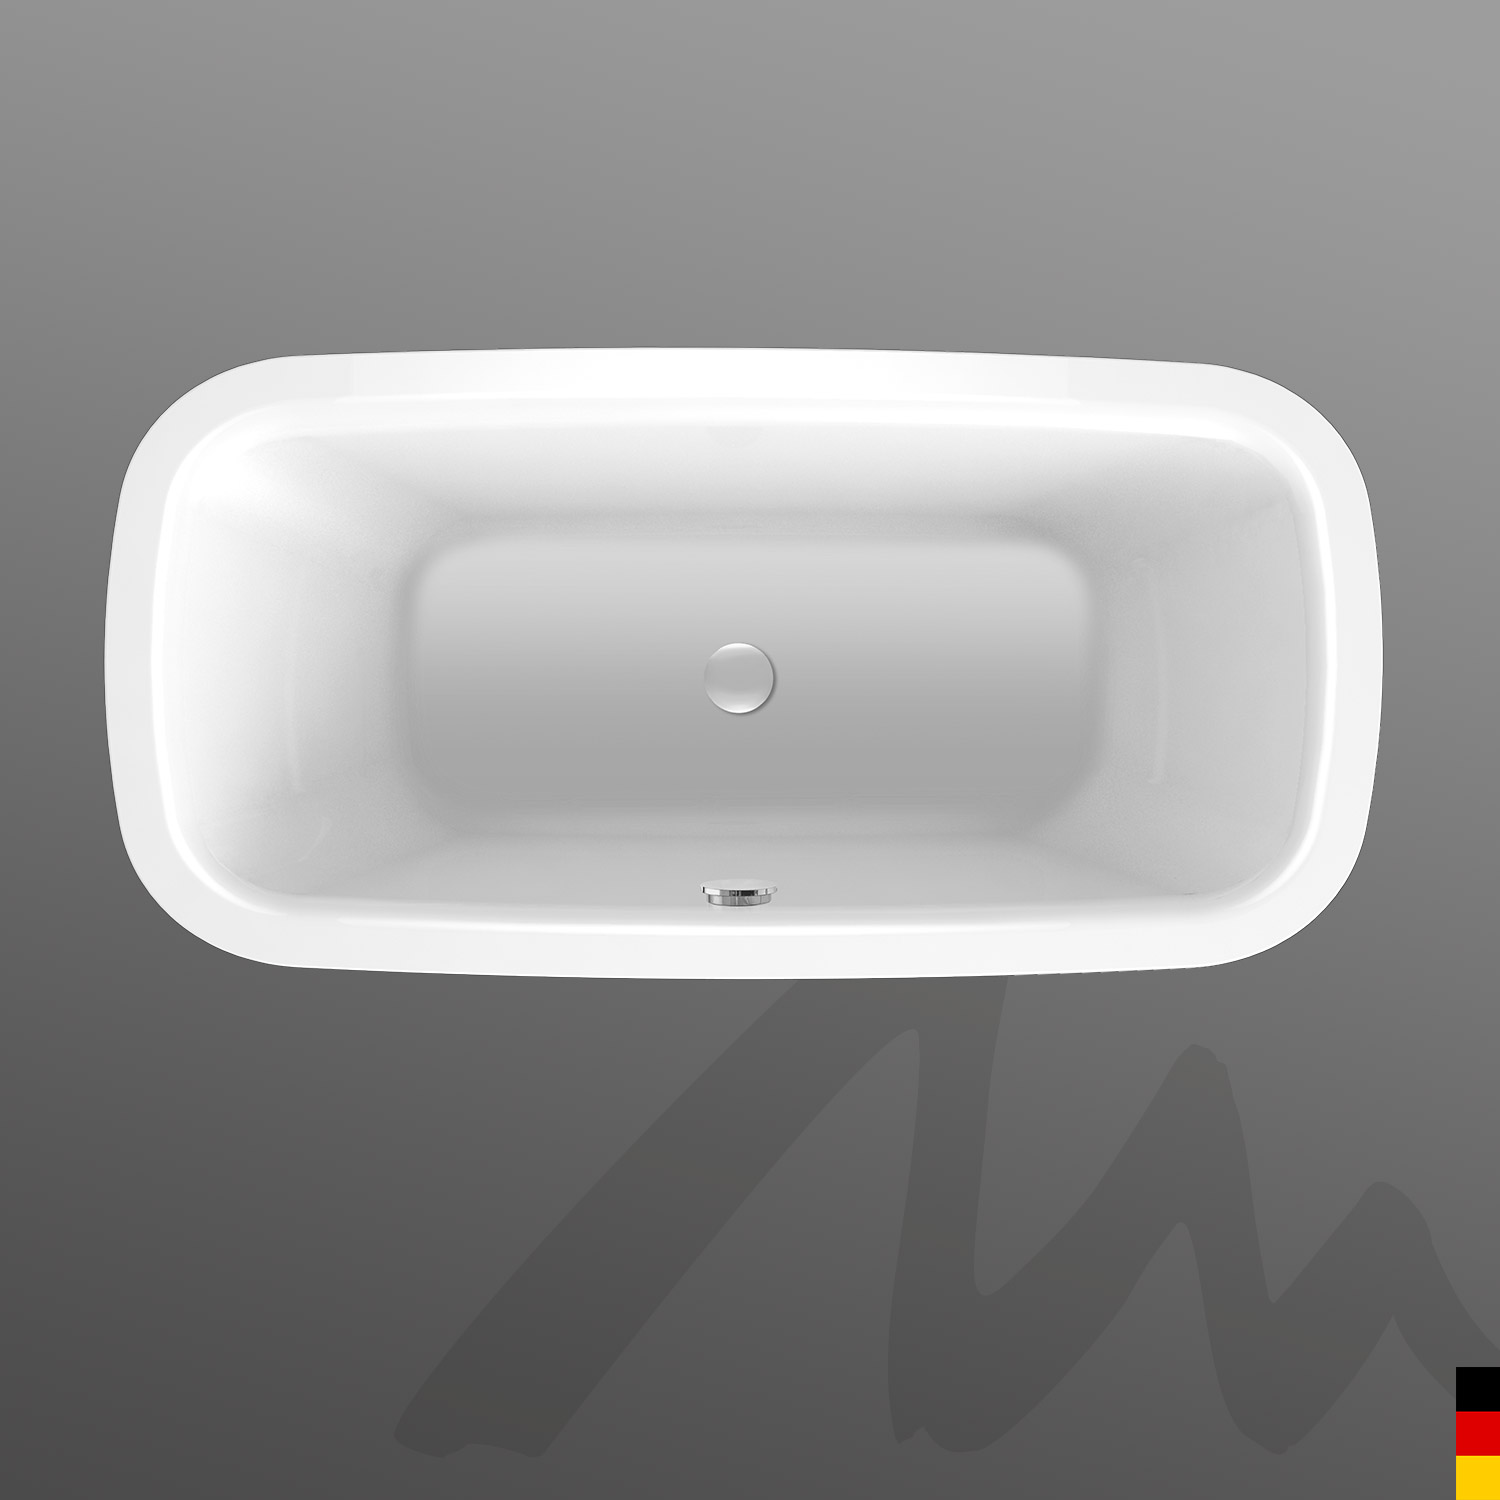 Mauersberger Badewanne Oval Nivalis Oval 180/90 duo  180x90x43cm  Farbe:rein-weiß